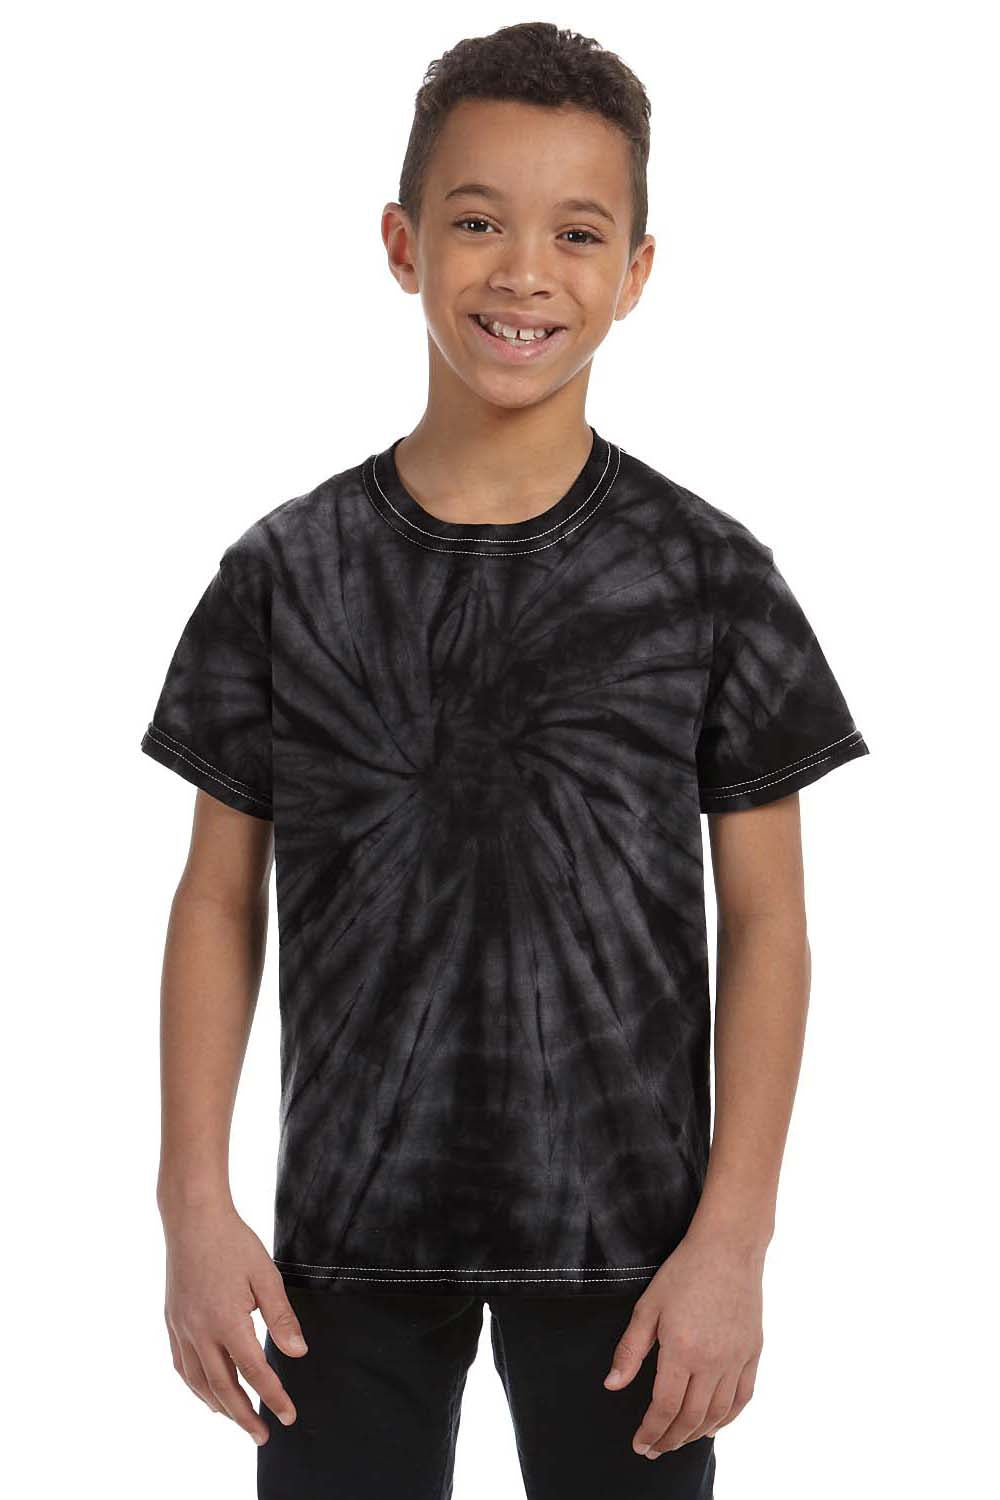 Tie-Dye CD101Y Youth Short Sleeve Crewneck T-Shirt Black Front